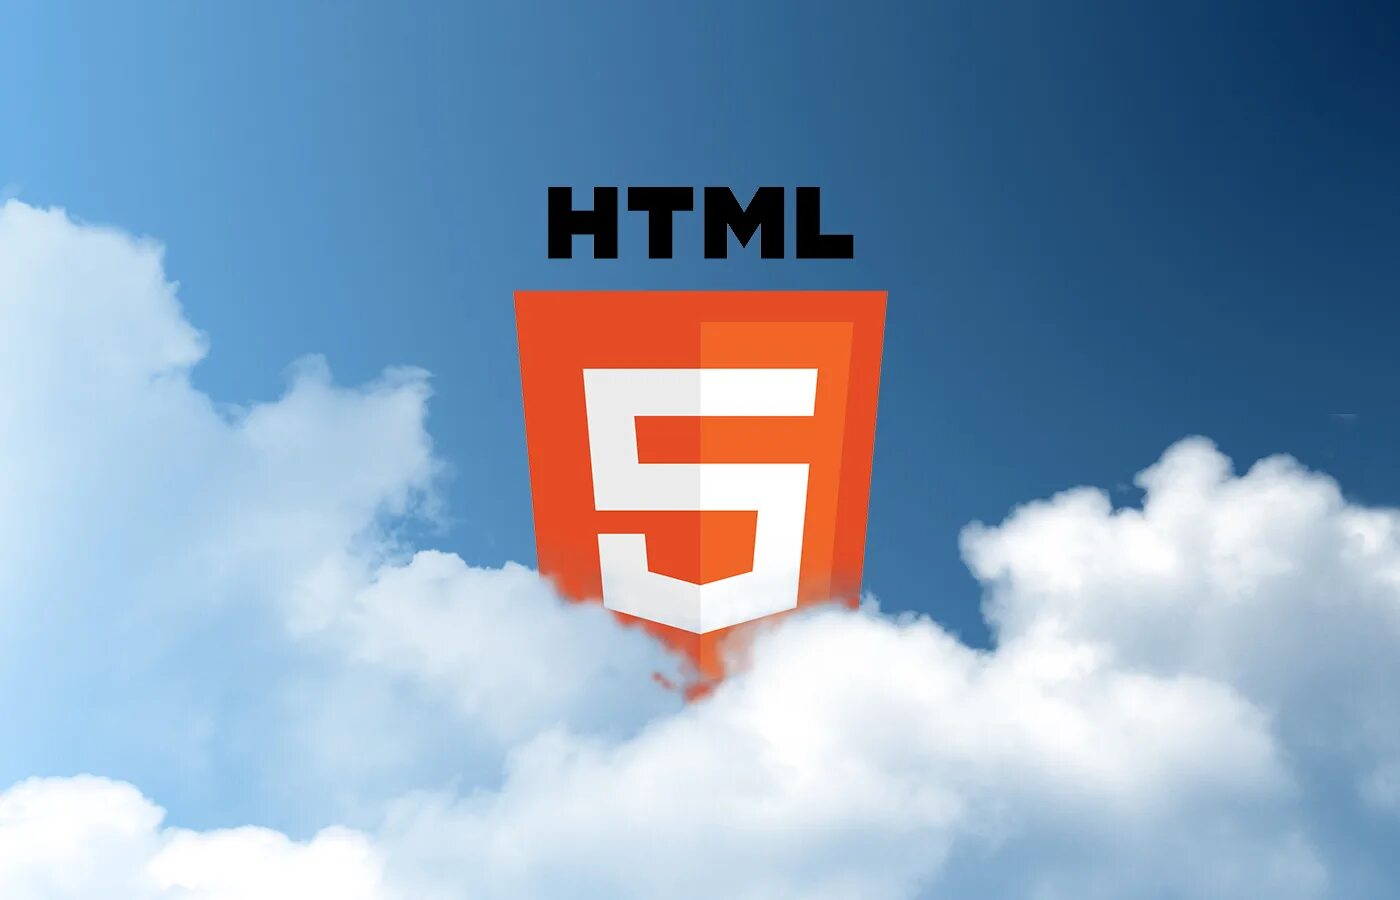 Html5 streaming. Html. Html5 лого. Картинка html. Значок html5.